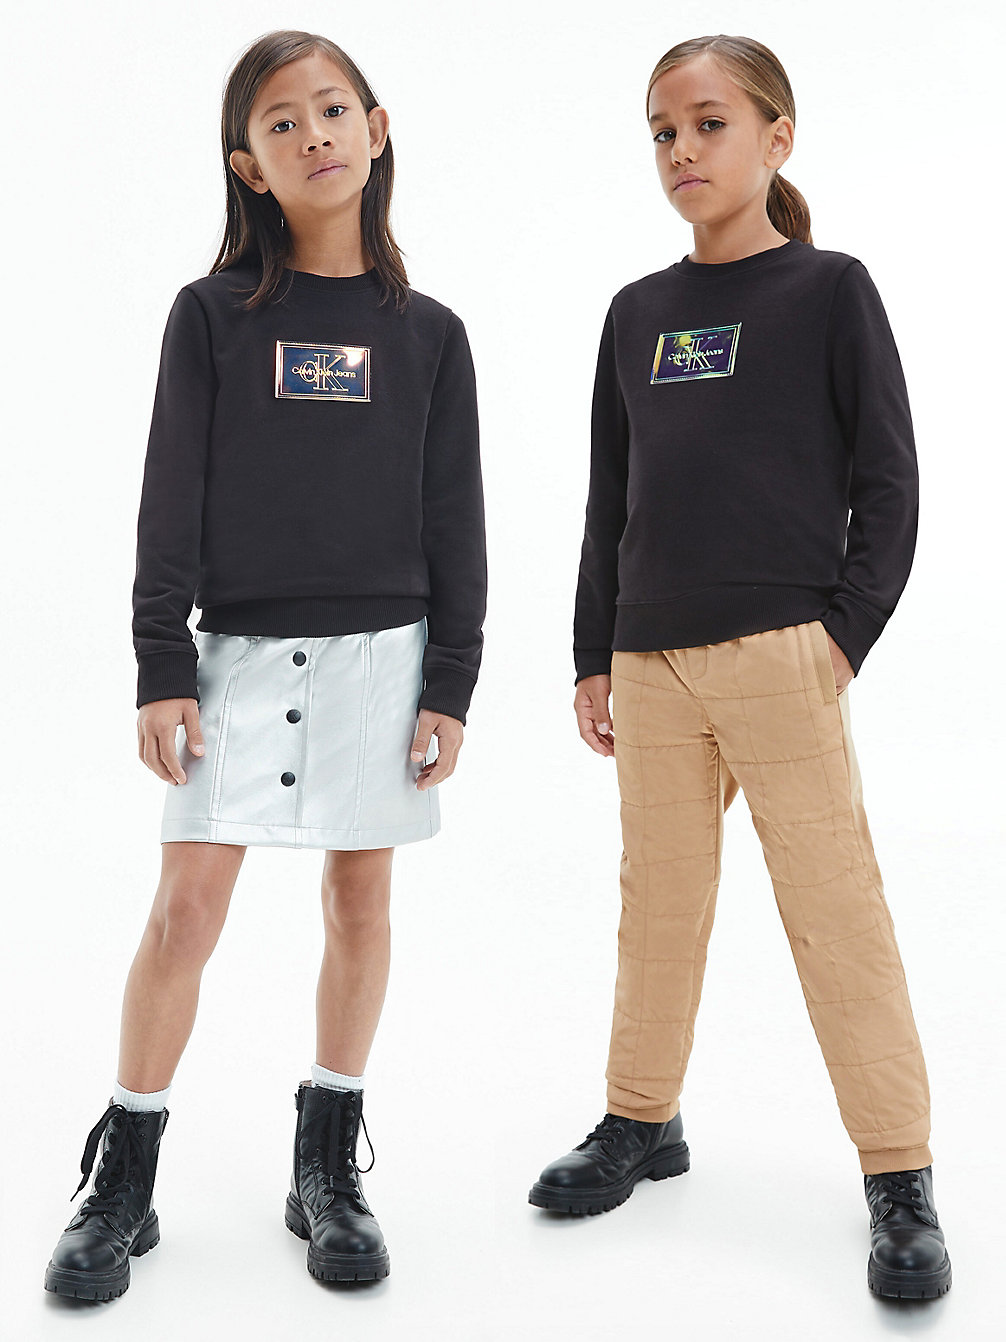 CK BLACK Sweat-Shirt Unisexe Avec Insigne Irisé undefined kids unisex Calvin Klein